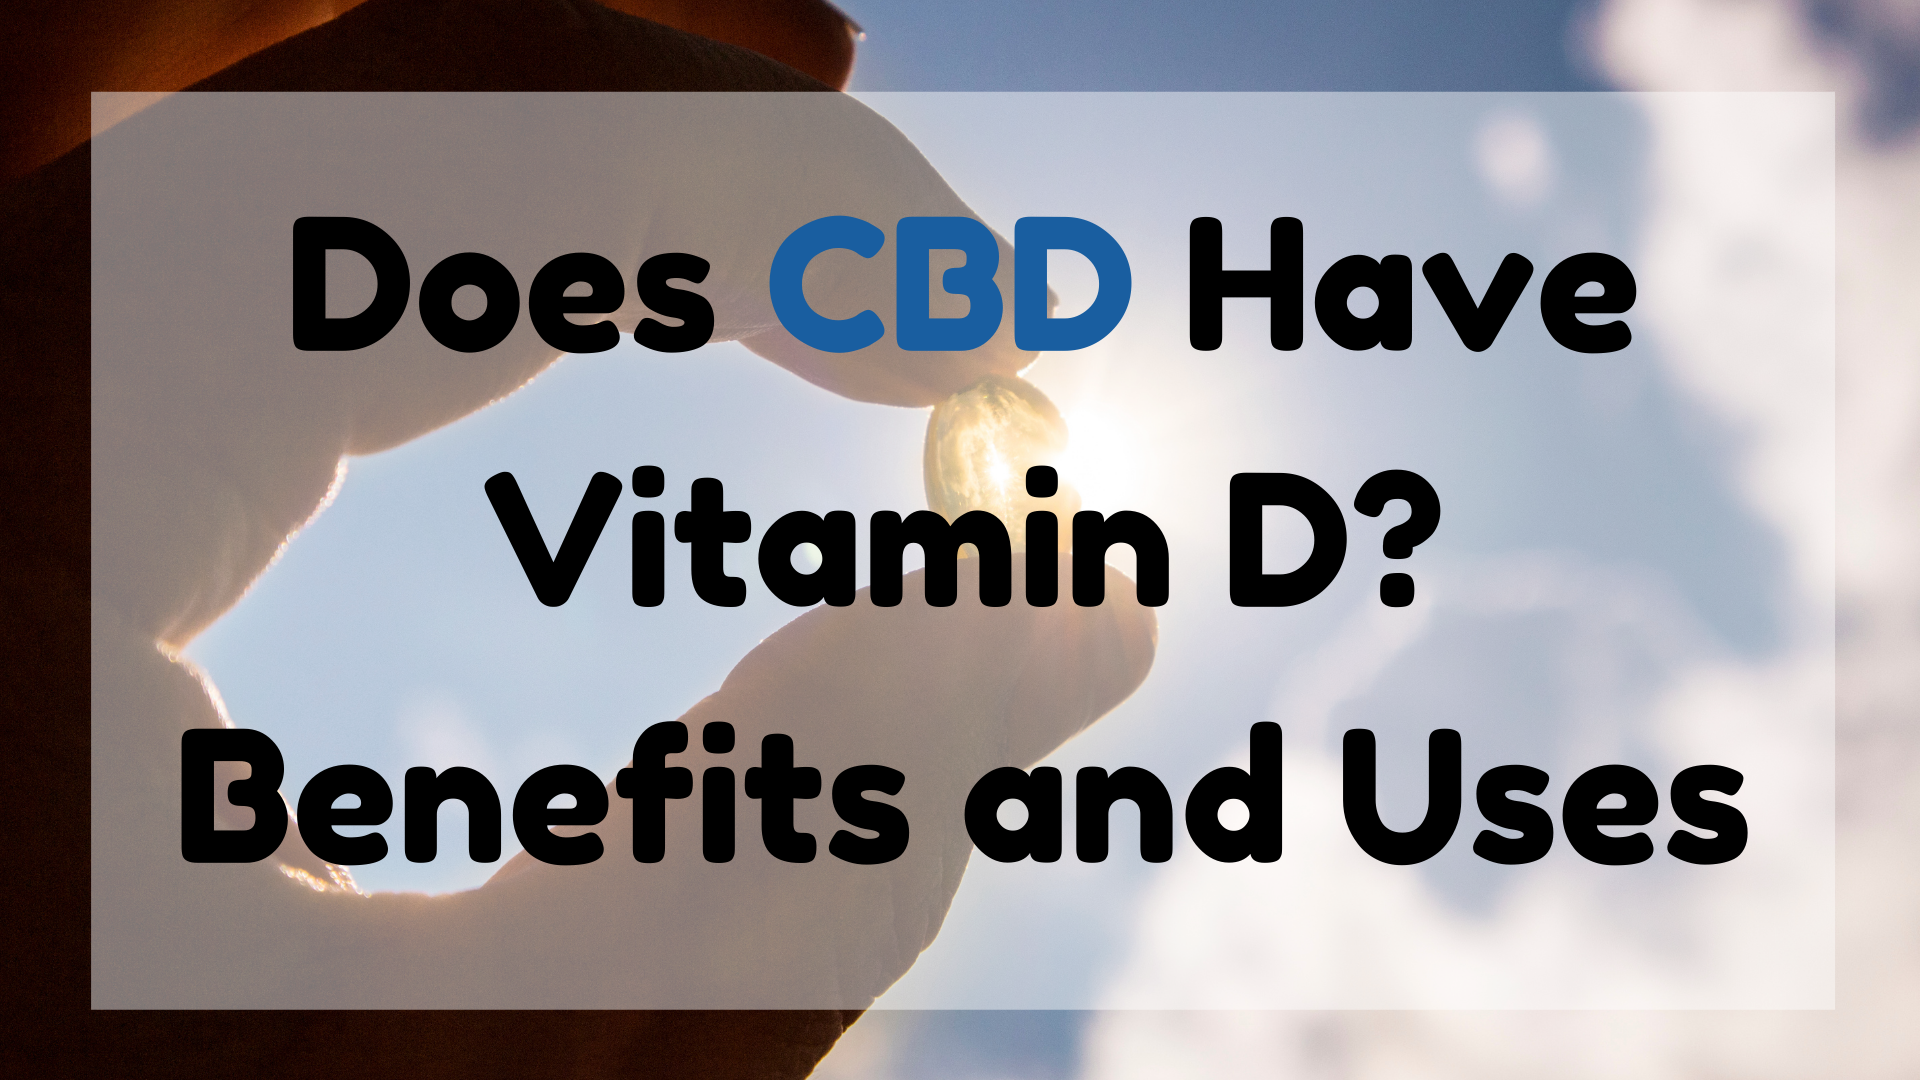 Does CBD Have Vitamin D